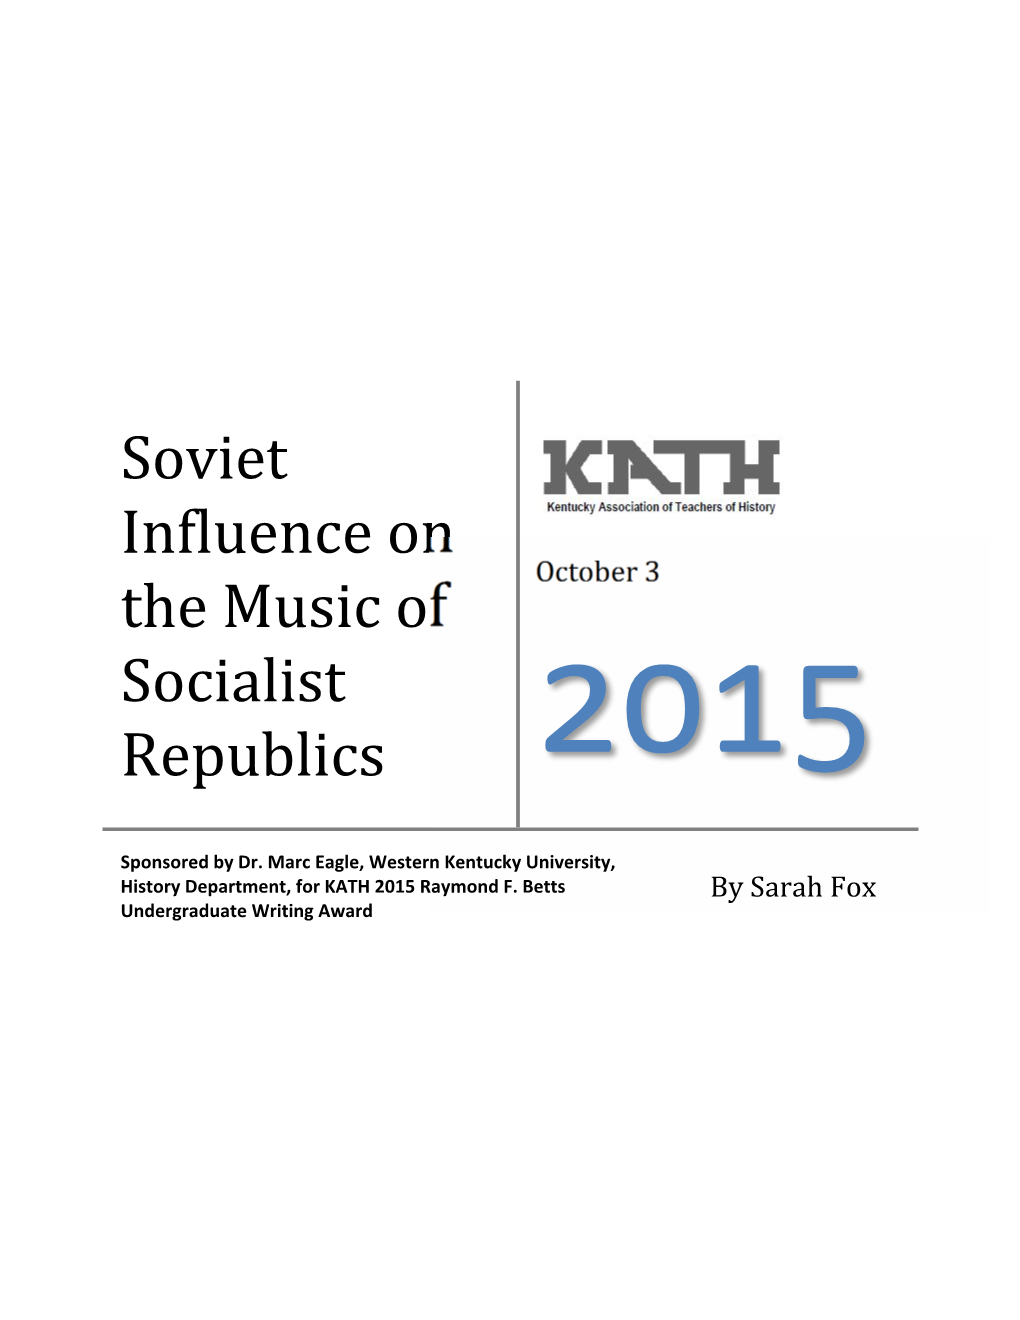 Soviet Influence on the Music of Socialist Republics